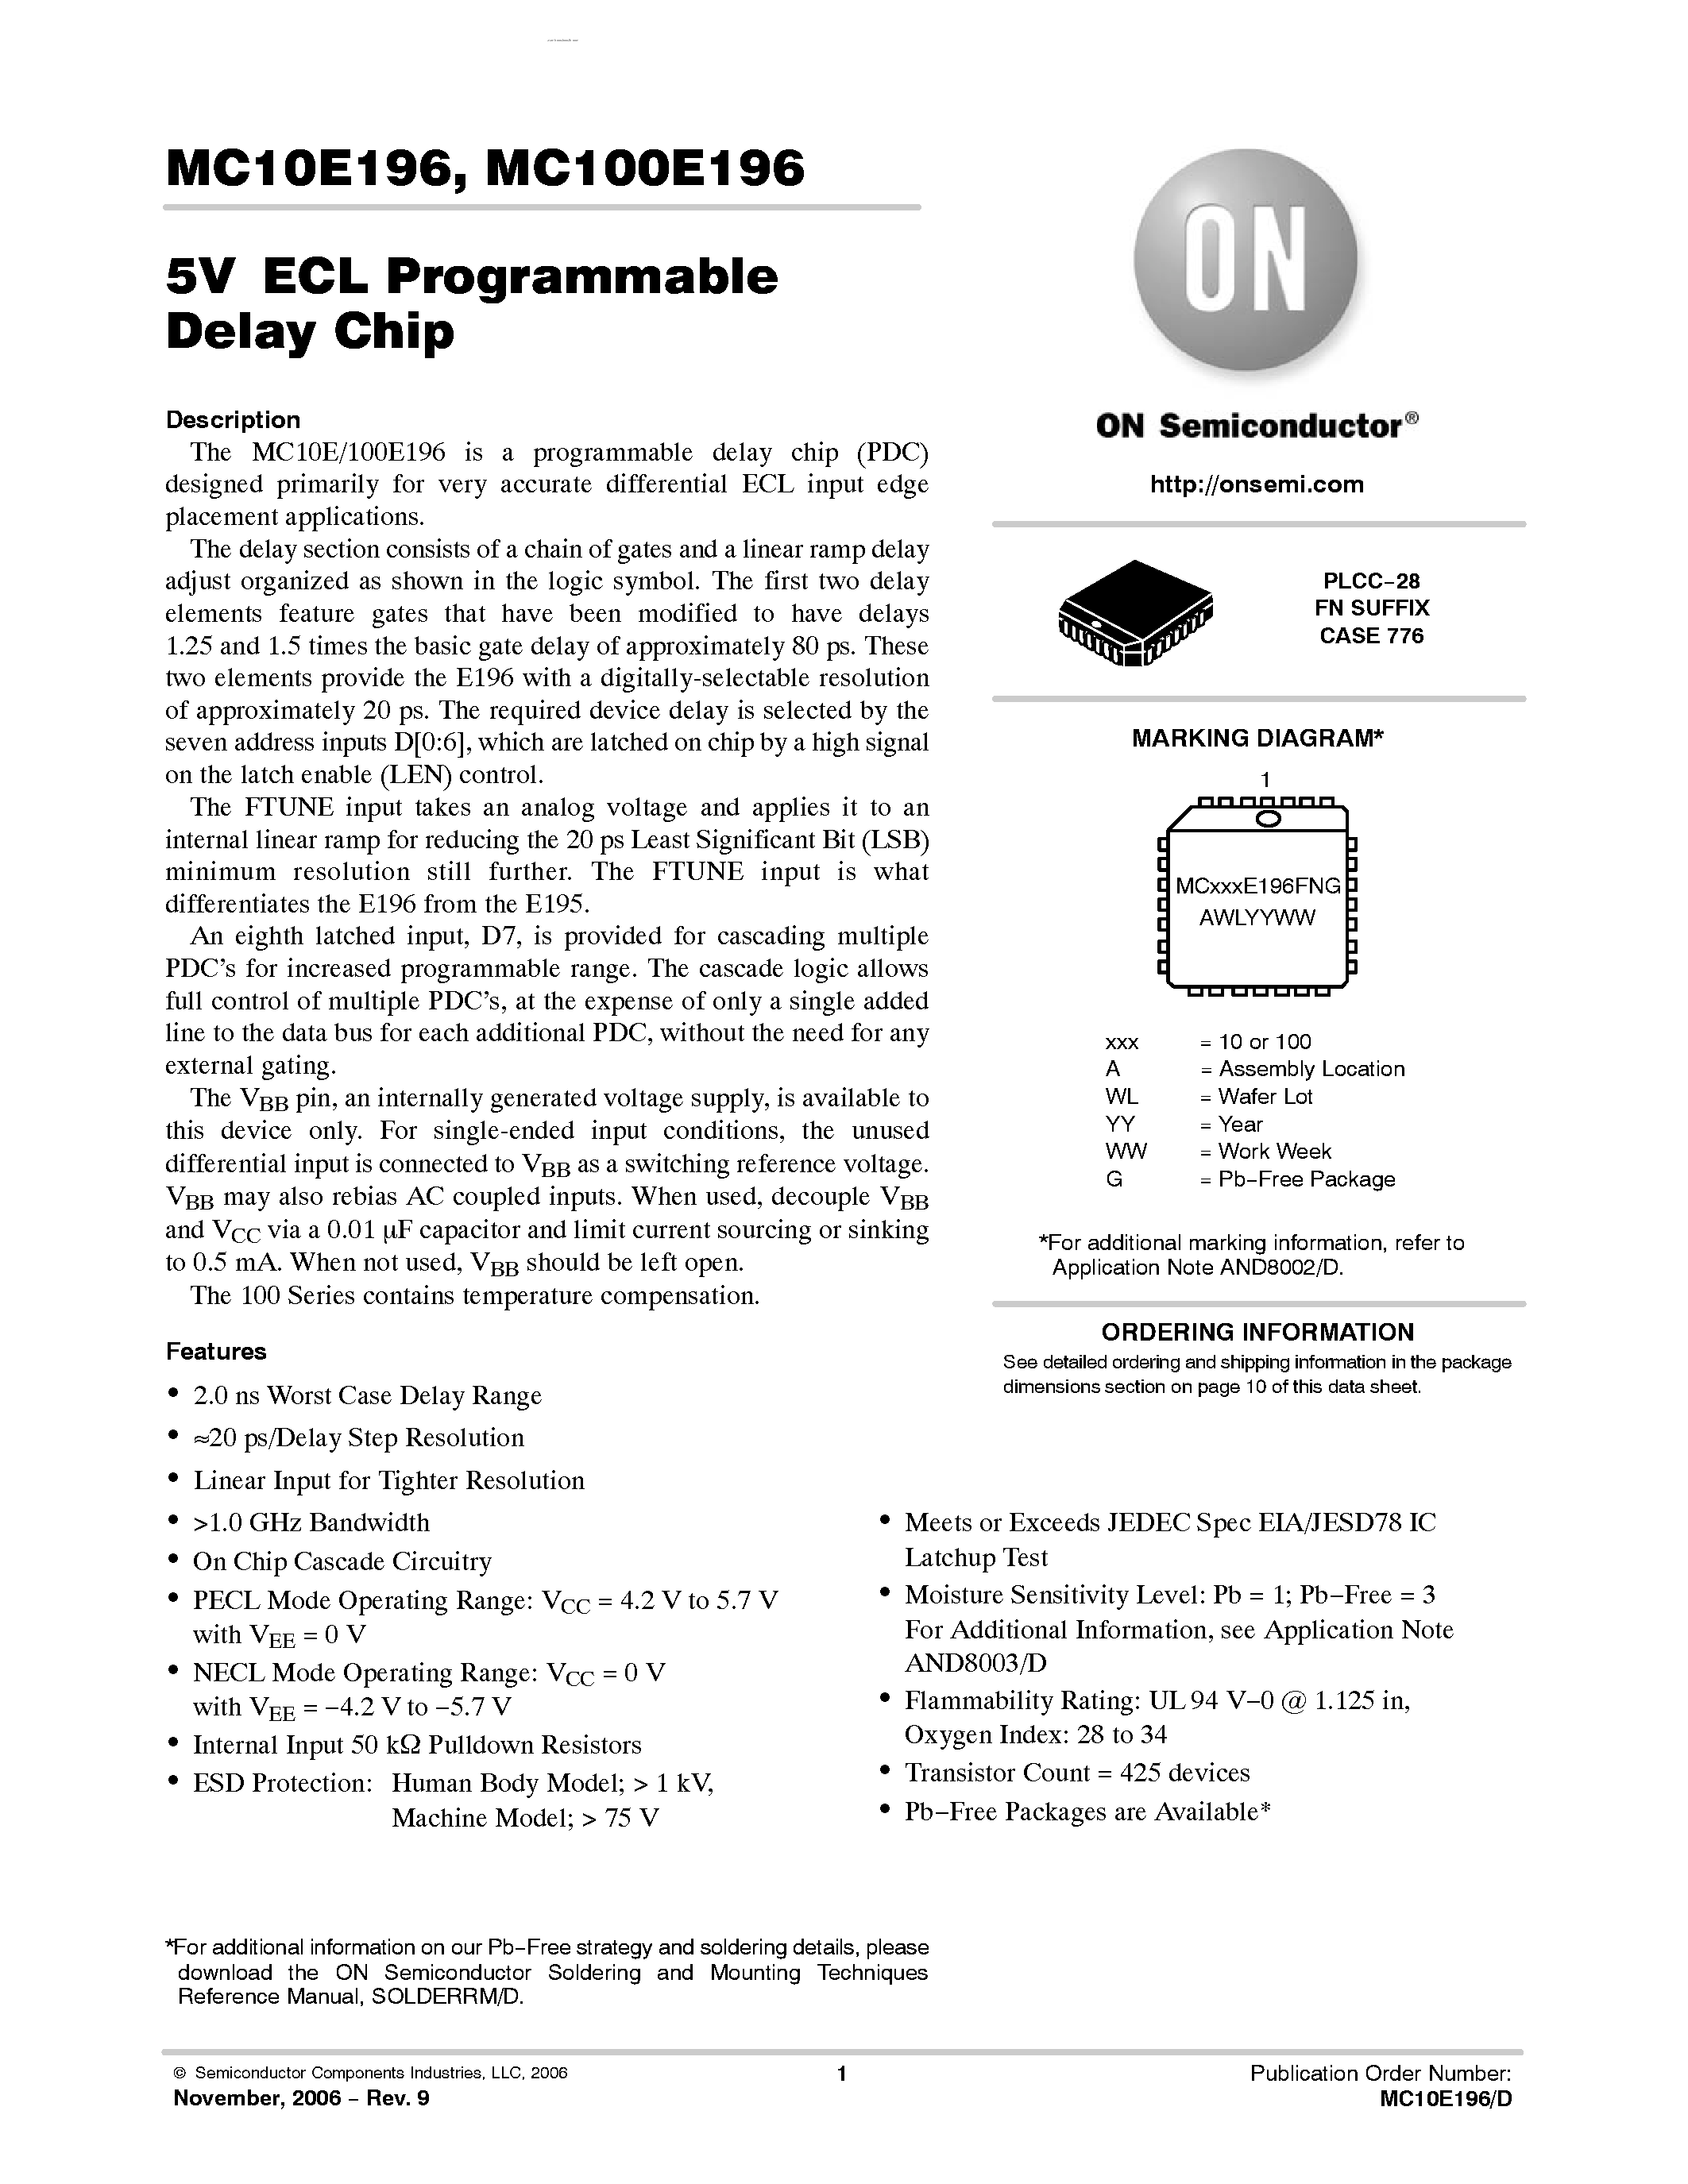 Datasheet MC100E196 - PROGRAMMABLE DELAY CHIP page 1